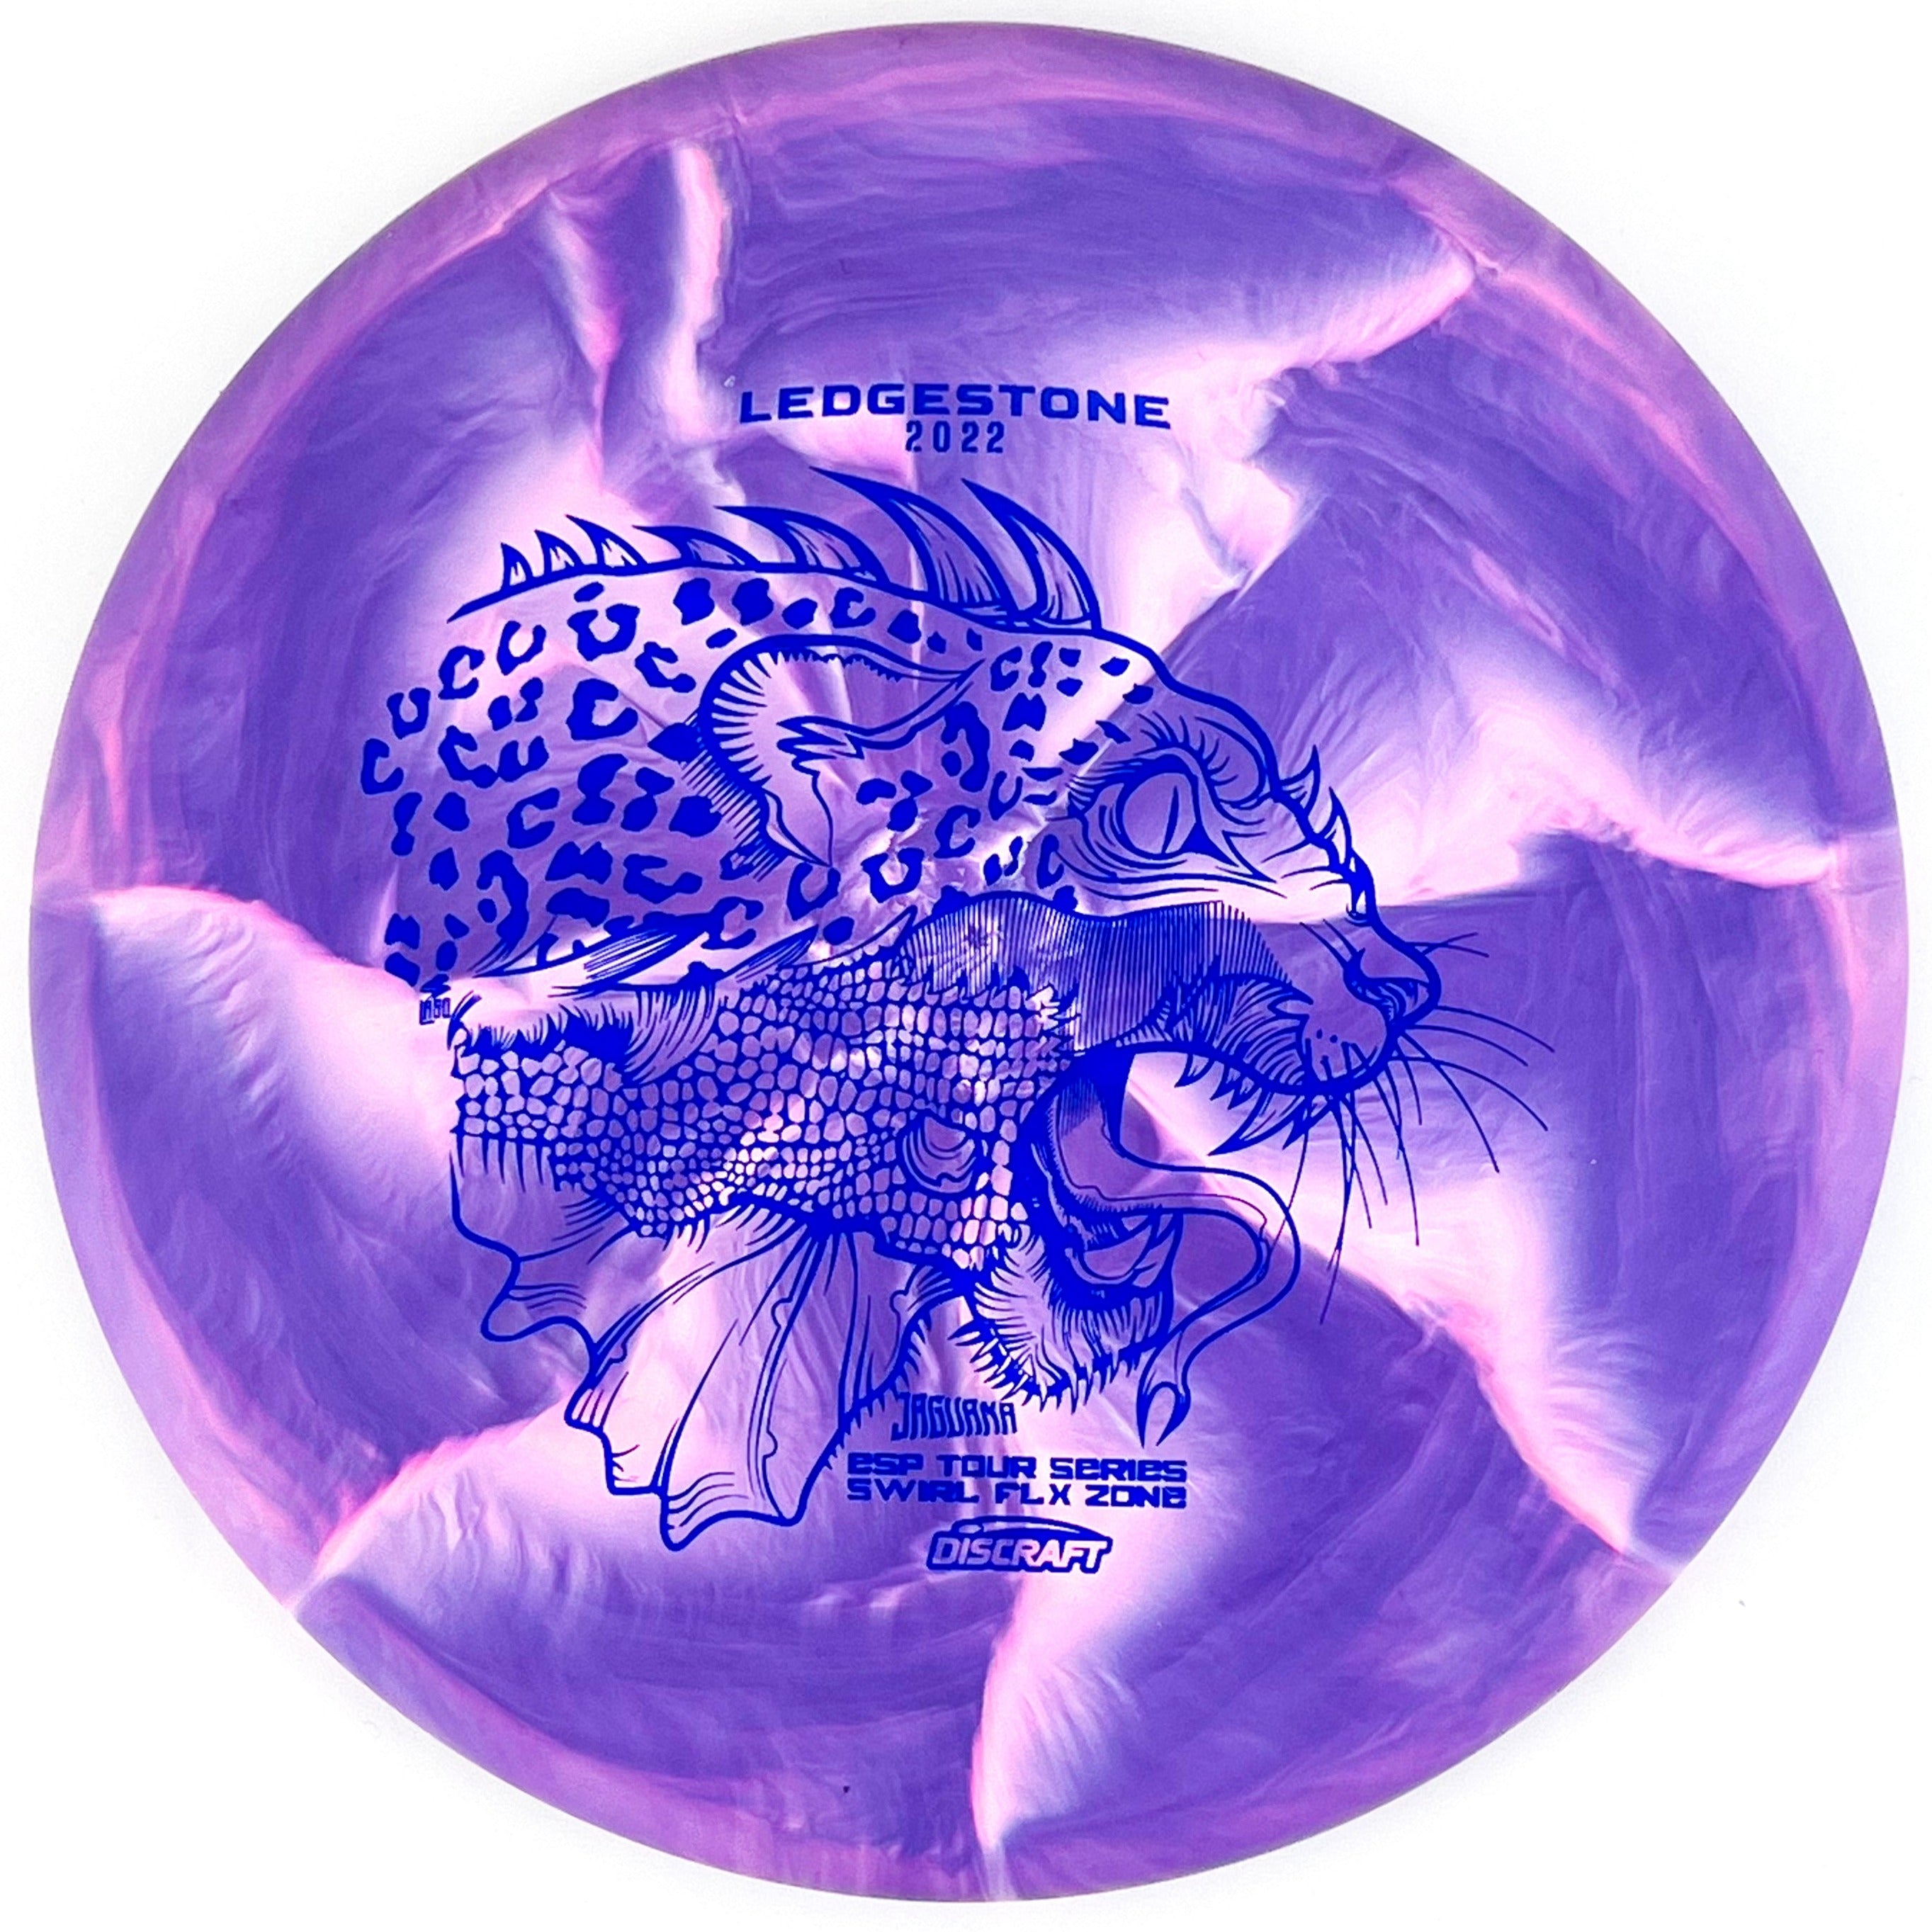 Purple 2022 Ledgestone Tour Series ESP Swirl Flx Jaguana Zone disc golf putt and approach disc from Discraft Disc Golf.